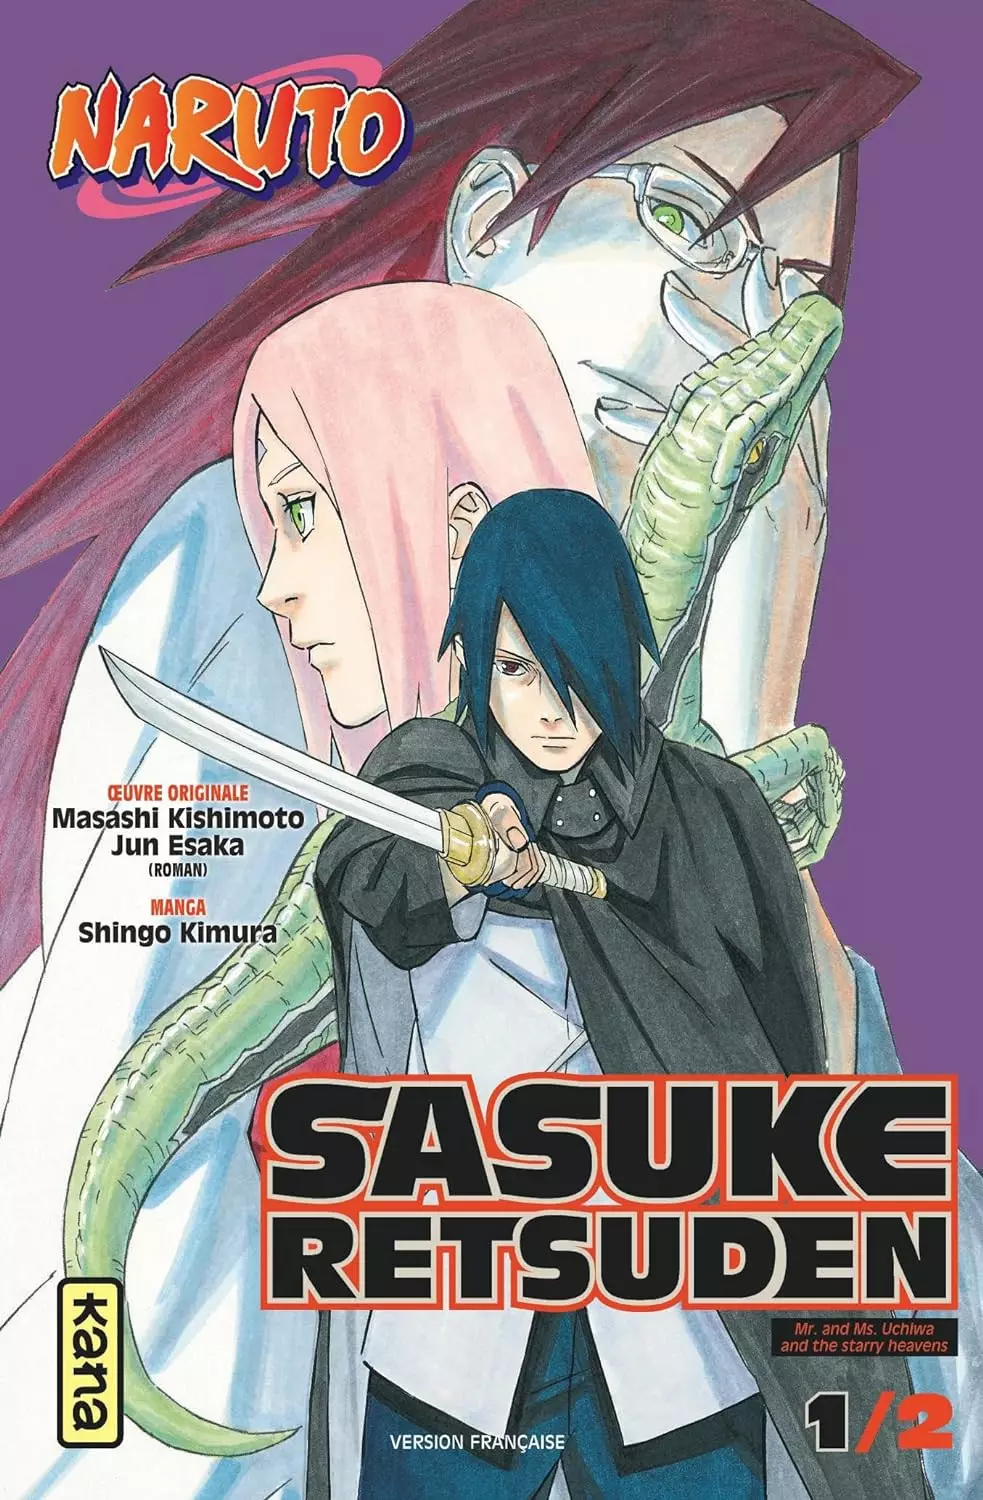 Les tomes en cours de lecture [Mangas] - Page 19 Naruto_-_Sasuke_Retsuden_-_Tome_1_-_Kana